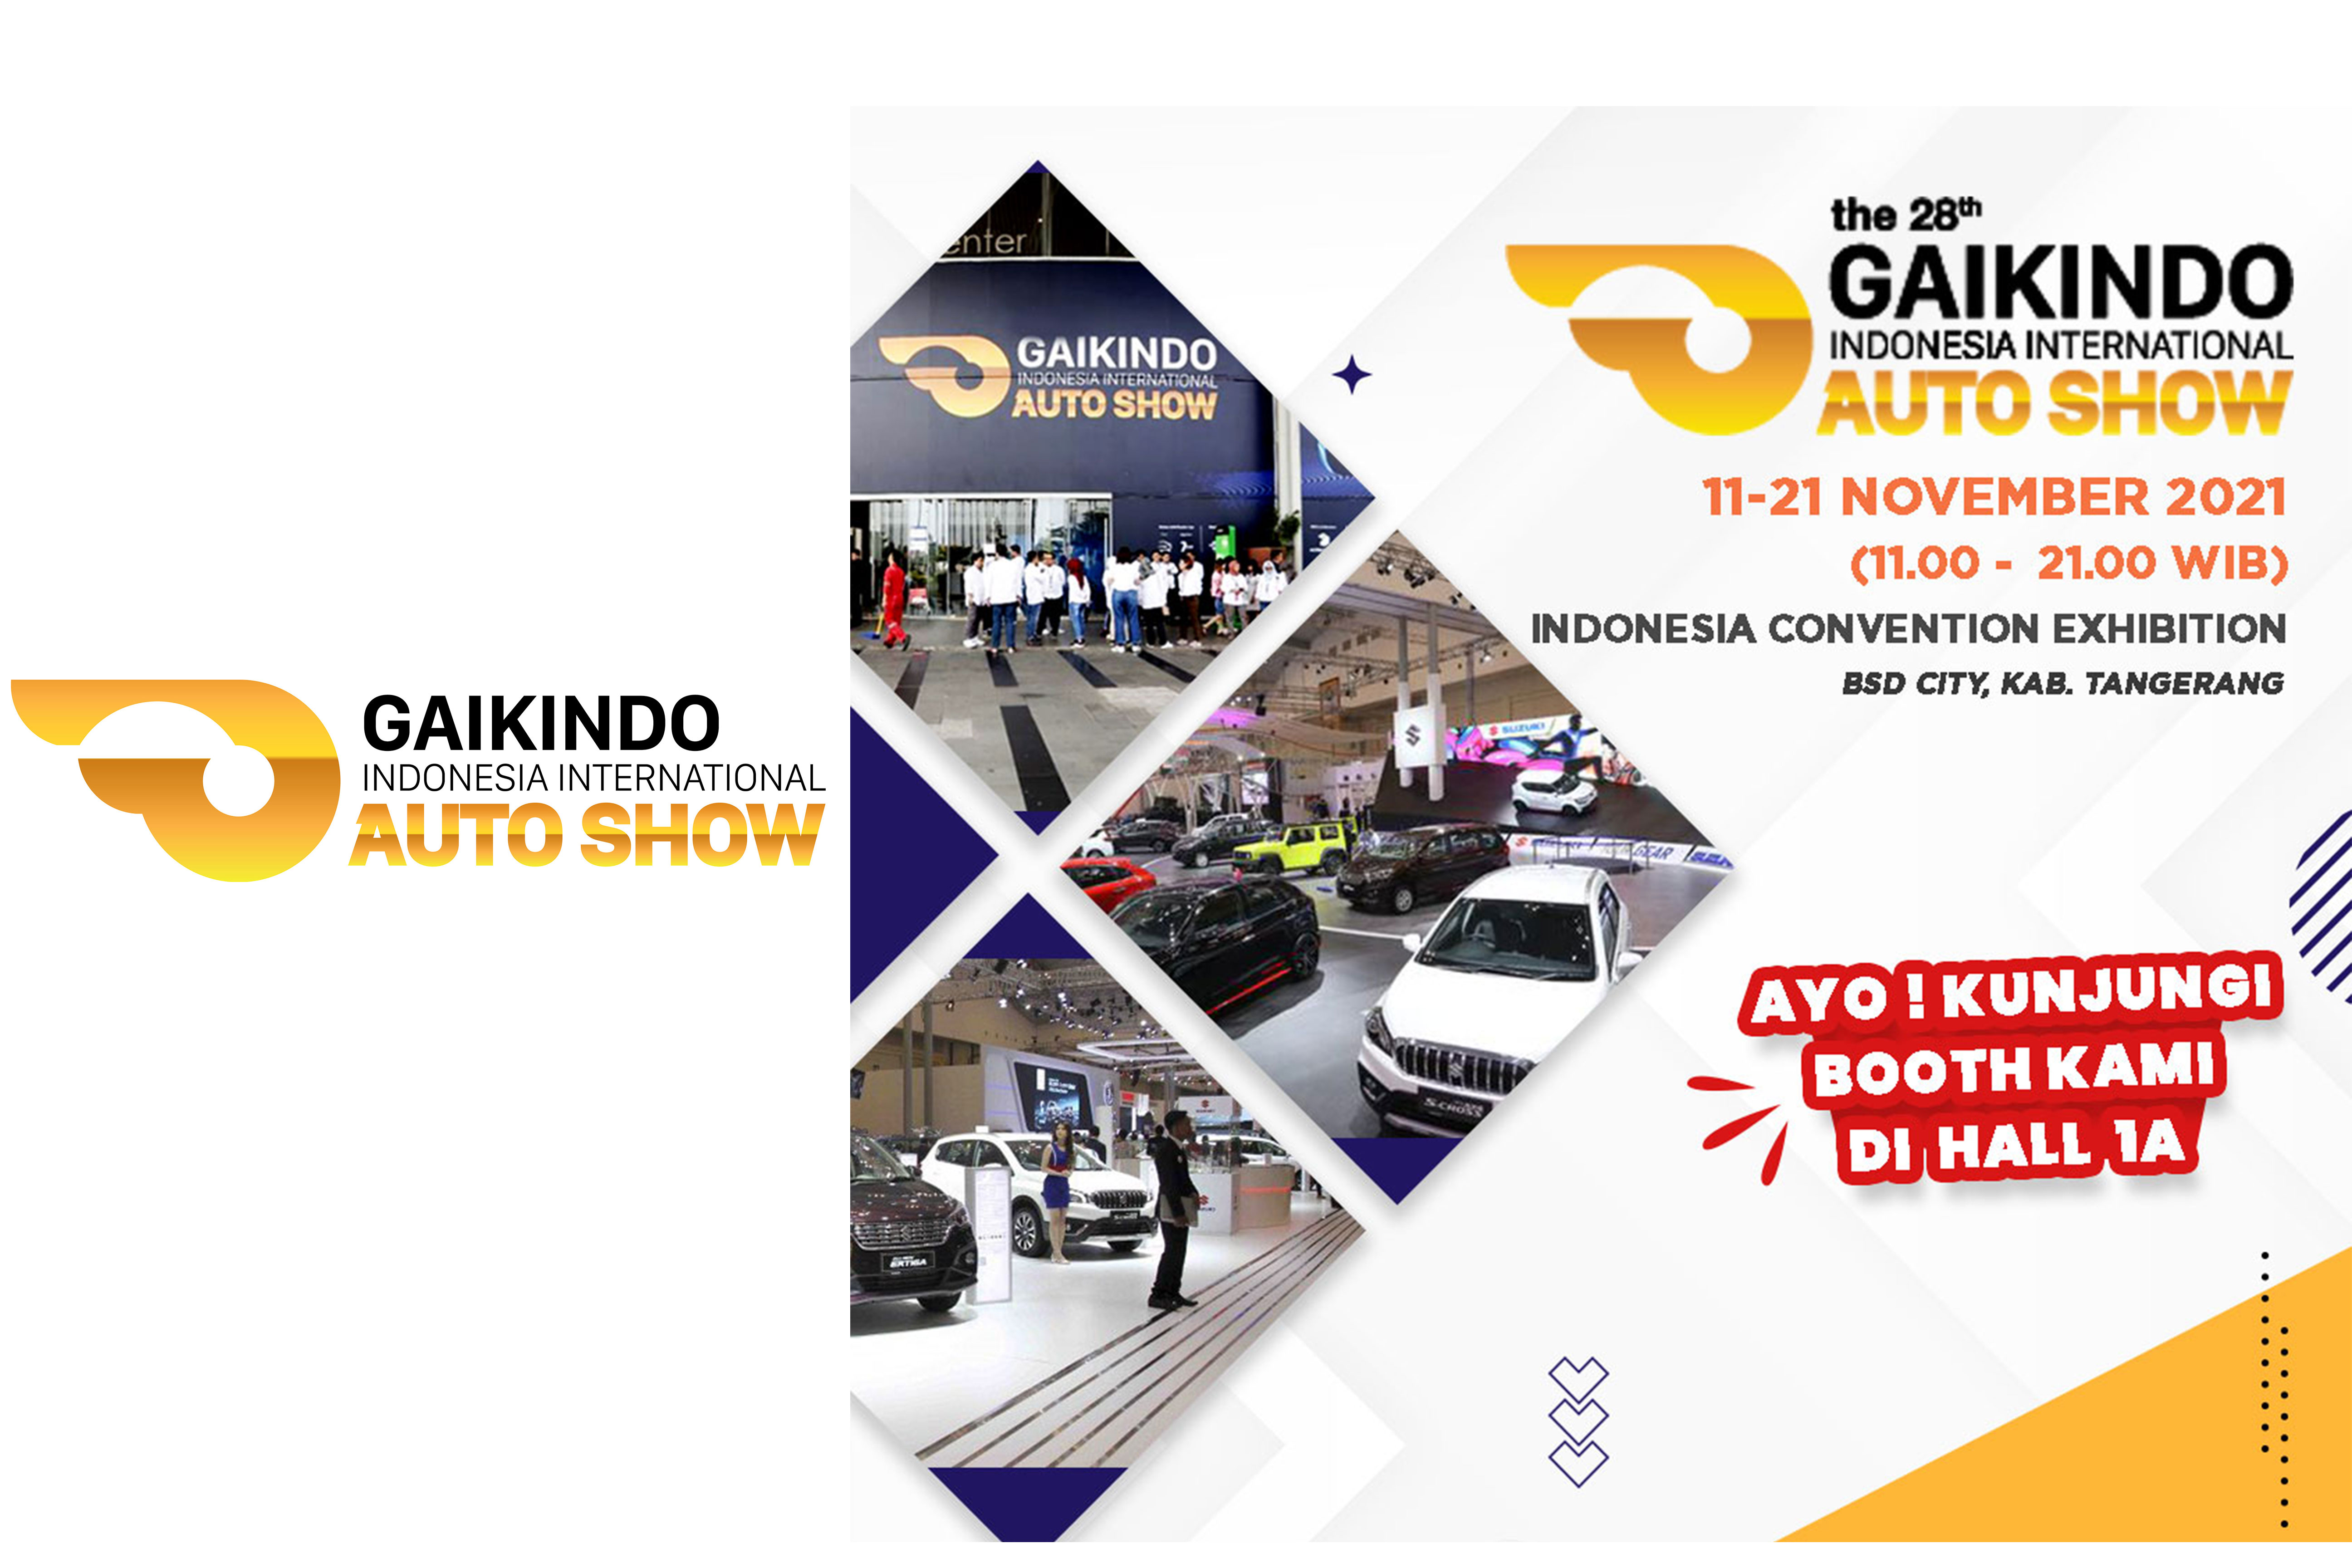 Gaikindo Indonesia International Auto Show 2021 (GIIAS) 